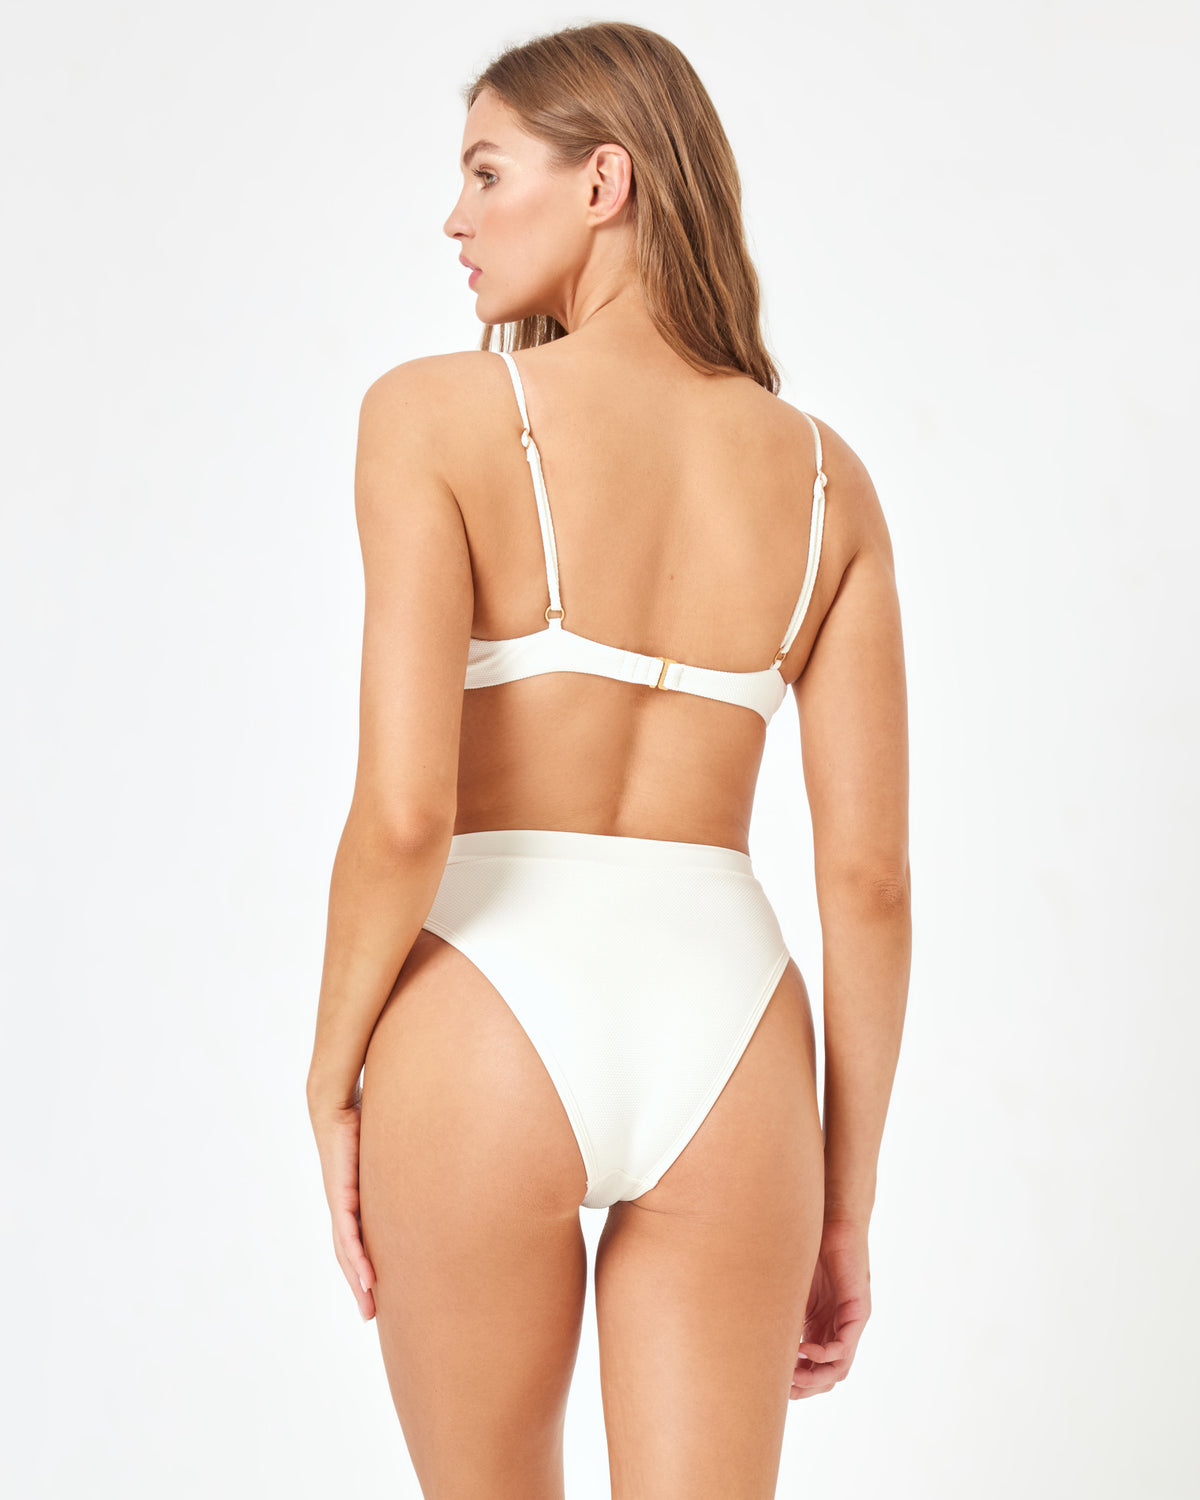 LSPACE X Anthropologie Frenchi Bikini Bottom - Cream Cream | Model: Daria (size: S)